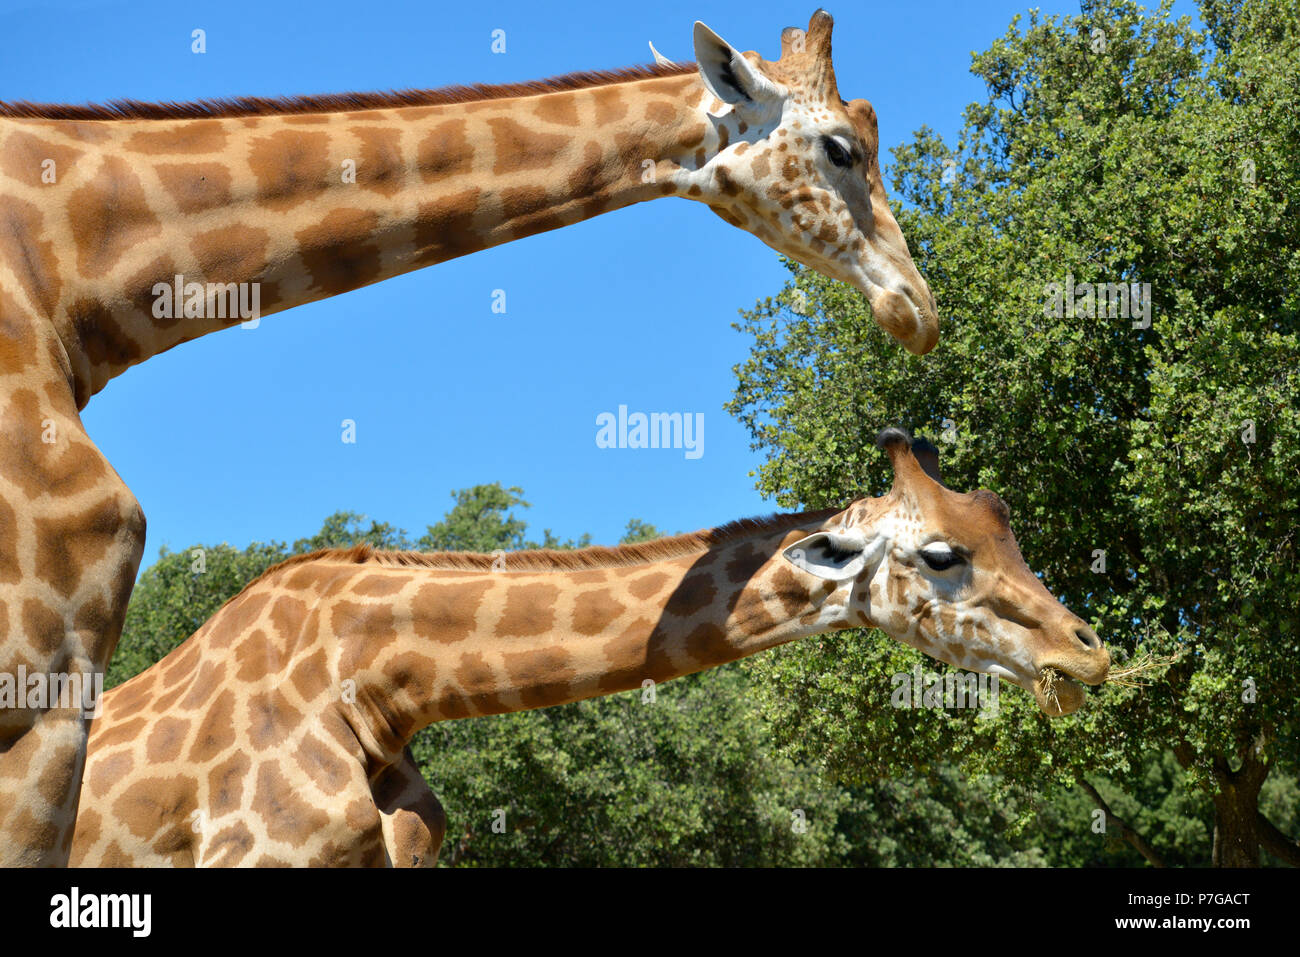 Closeup two giraffes (Giraffa camelopardalis) eating seen from profile Stock Photo